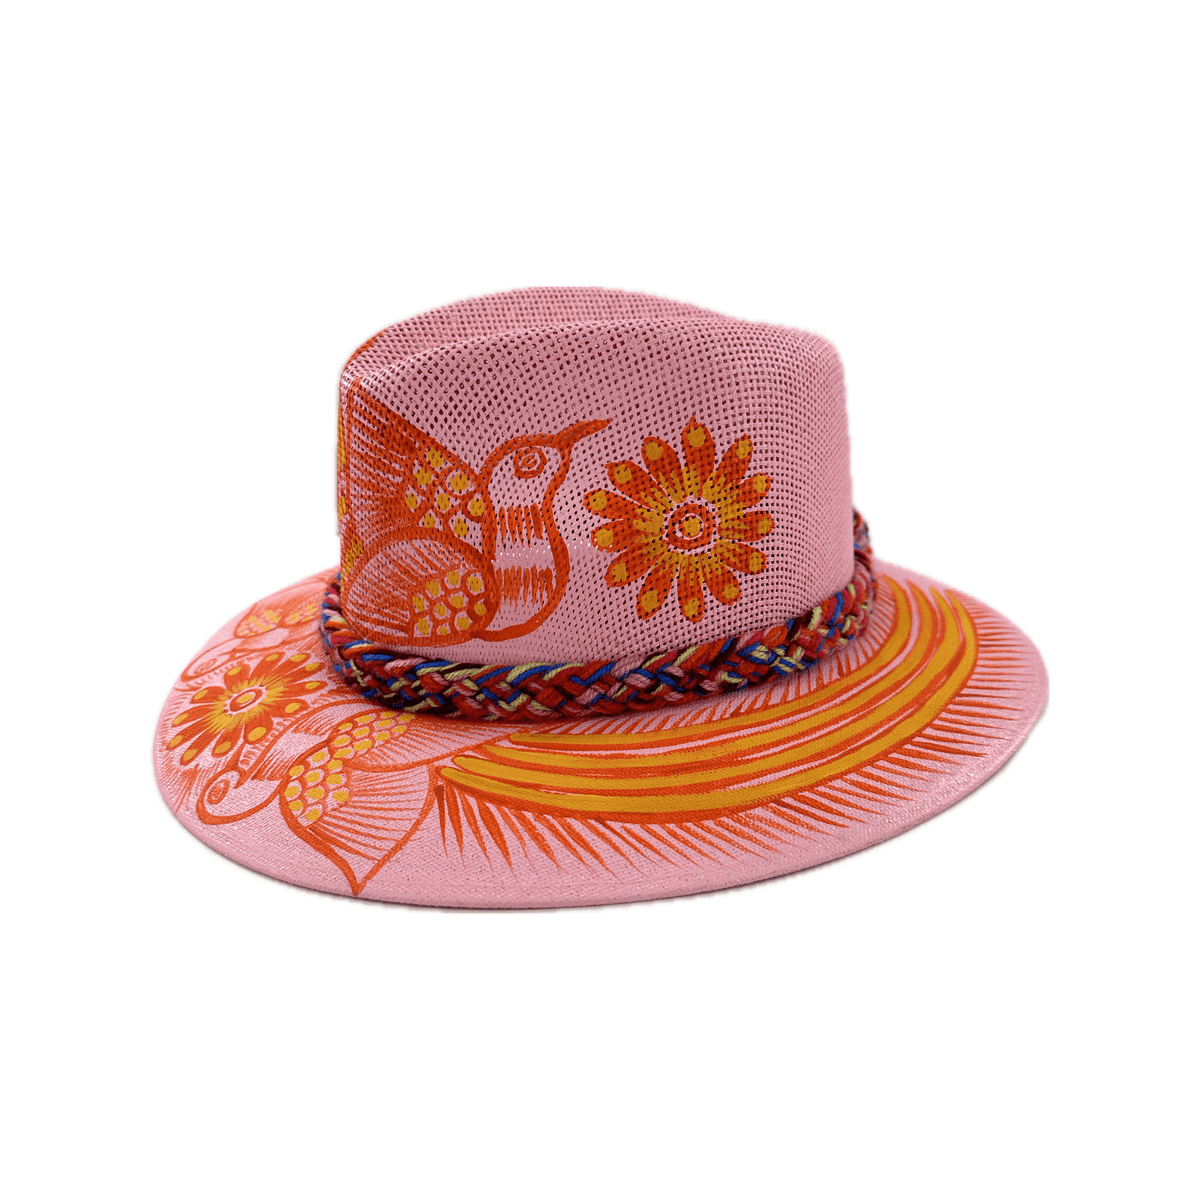 Carmen Hand Painted Hat - Light Pink with Orange Bird #3 - Josephine Alexander Collective